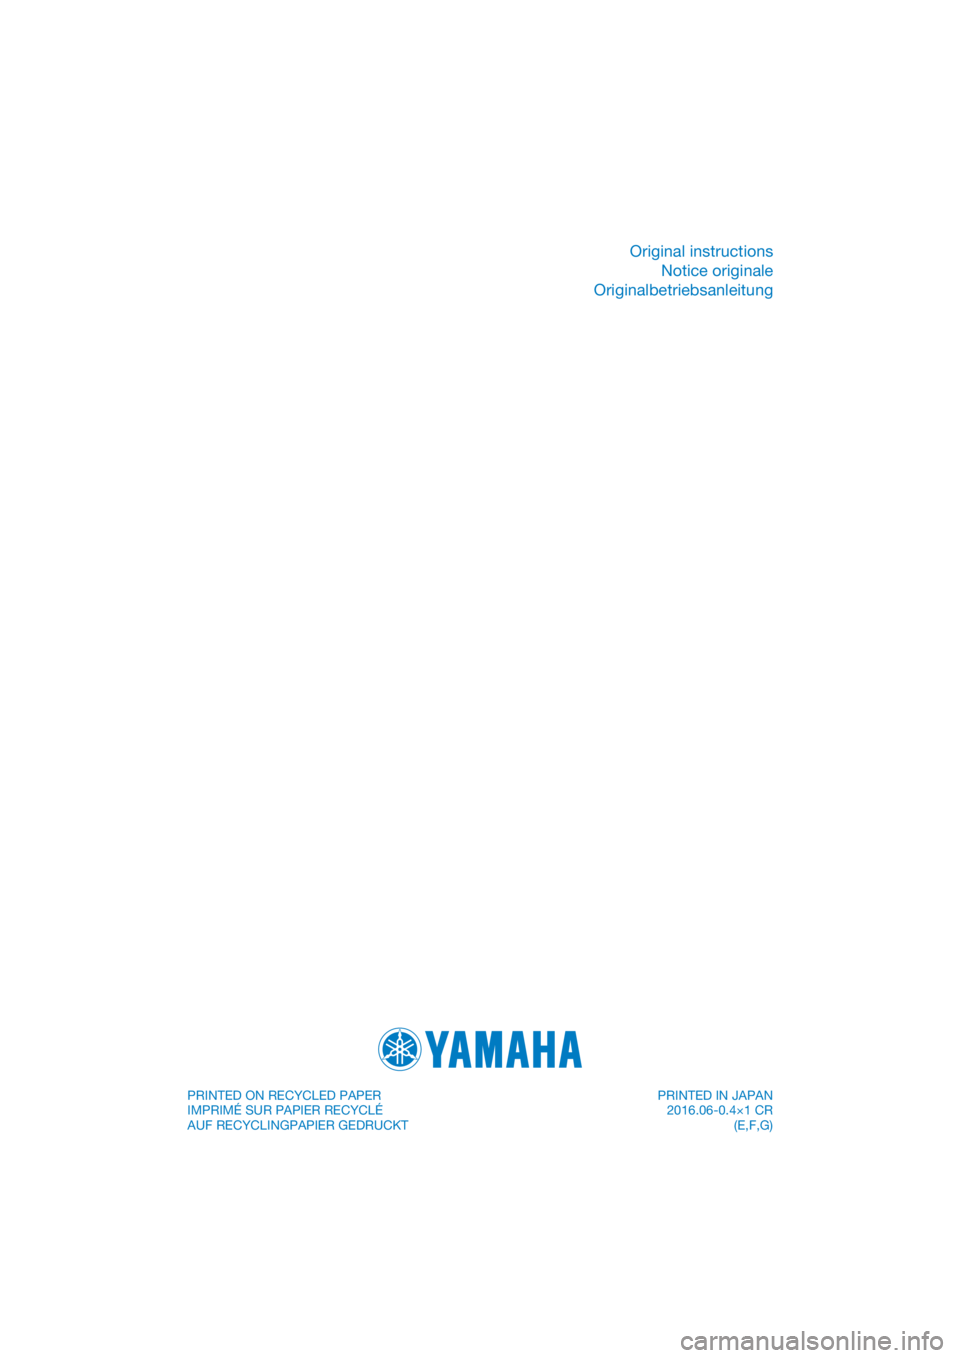 YAMAHA YZ85 2017  Owners Manual DIC183
Original instructionsNotice originale
Originalbetriebsanleitung
PRINTED ON RECYCLED PAPER
IMPRIMÉ SUR PAPIER RECYCLÉ
AUF RECYCLINGPAPIER GEDRUCKT  PRINTED IN JAPAN
2016.06-0.4×1 CR (E,F,G) 